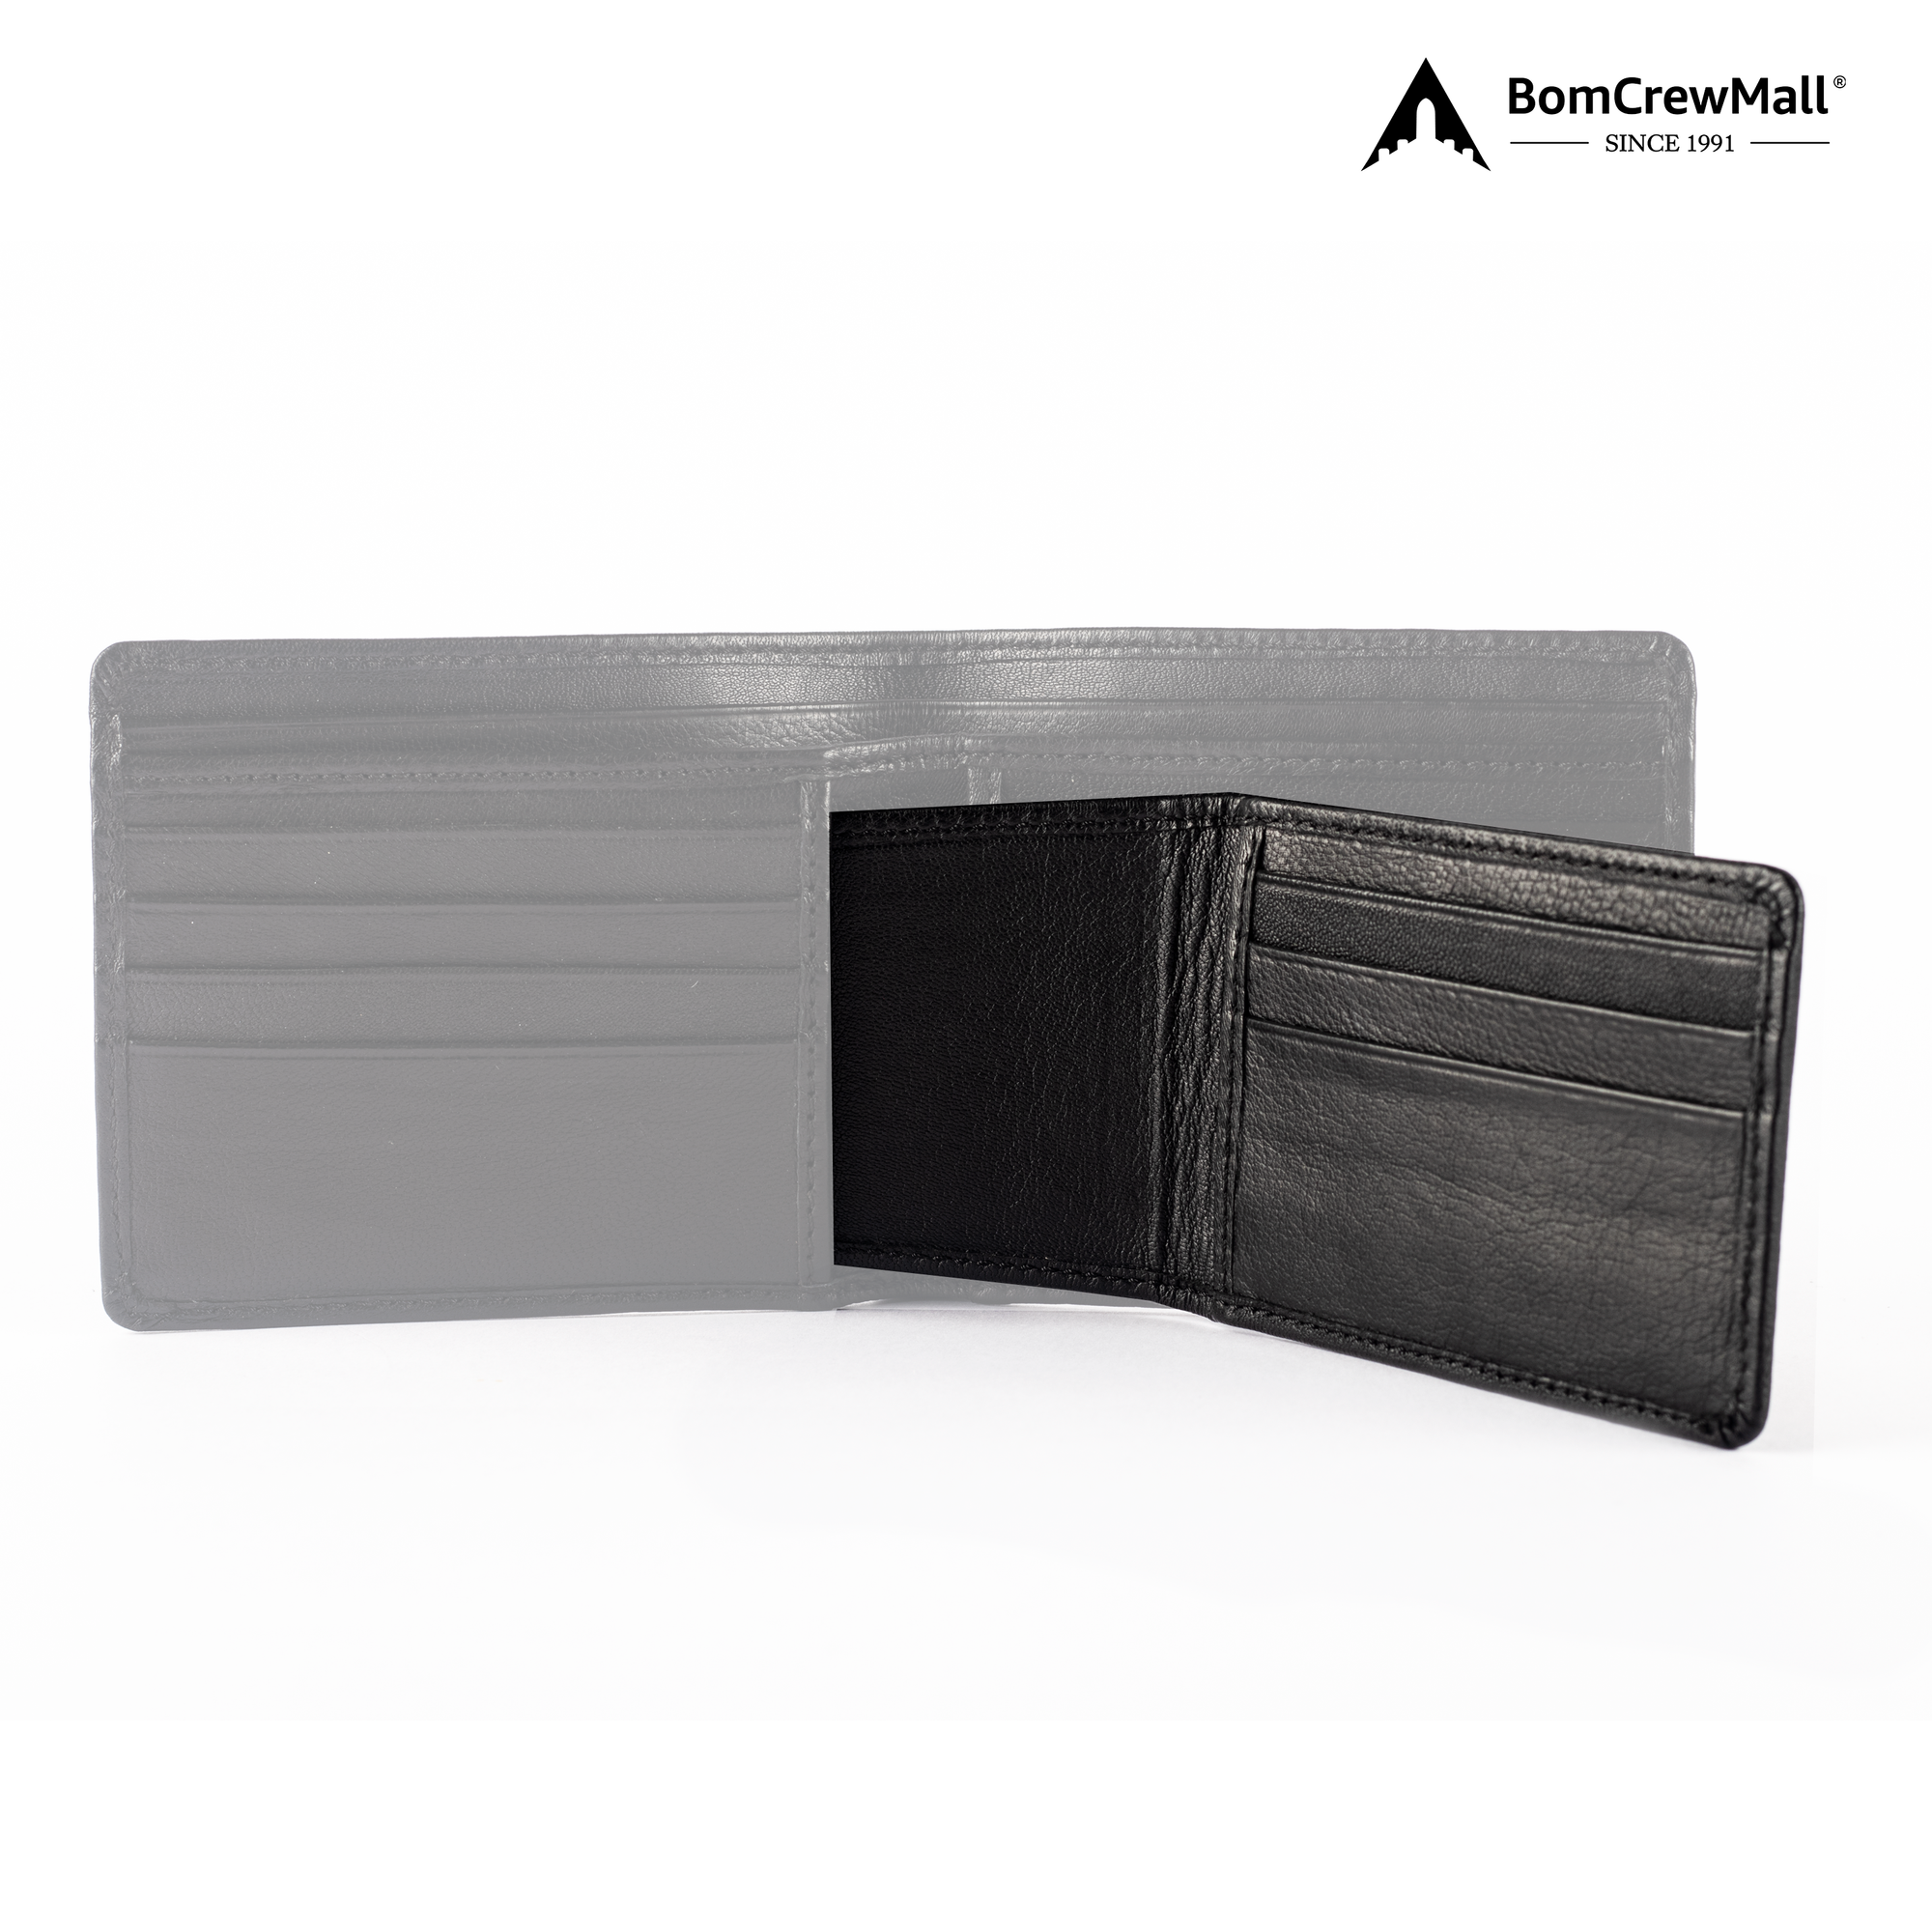 Image displays Grey leather wallet